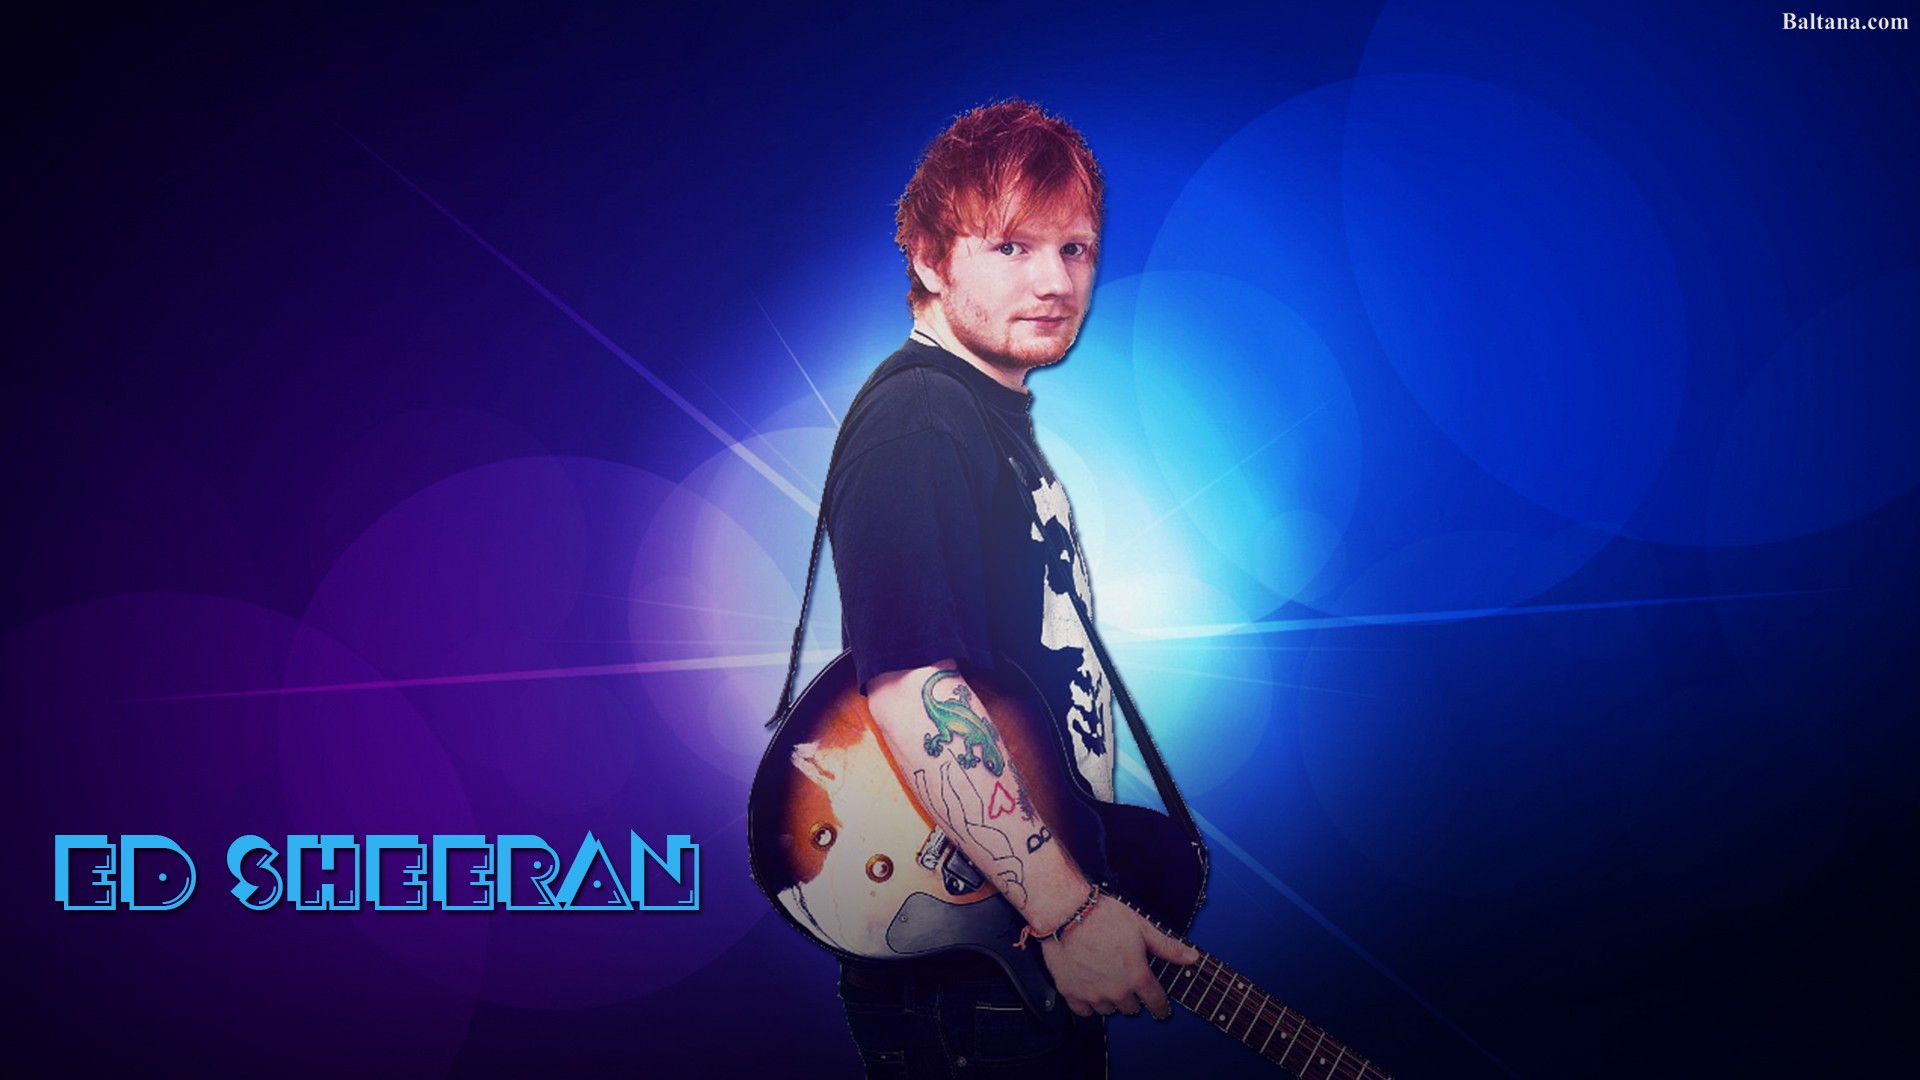 Ed Sheeran Background Wallpaper 30341